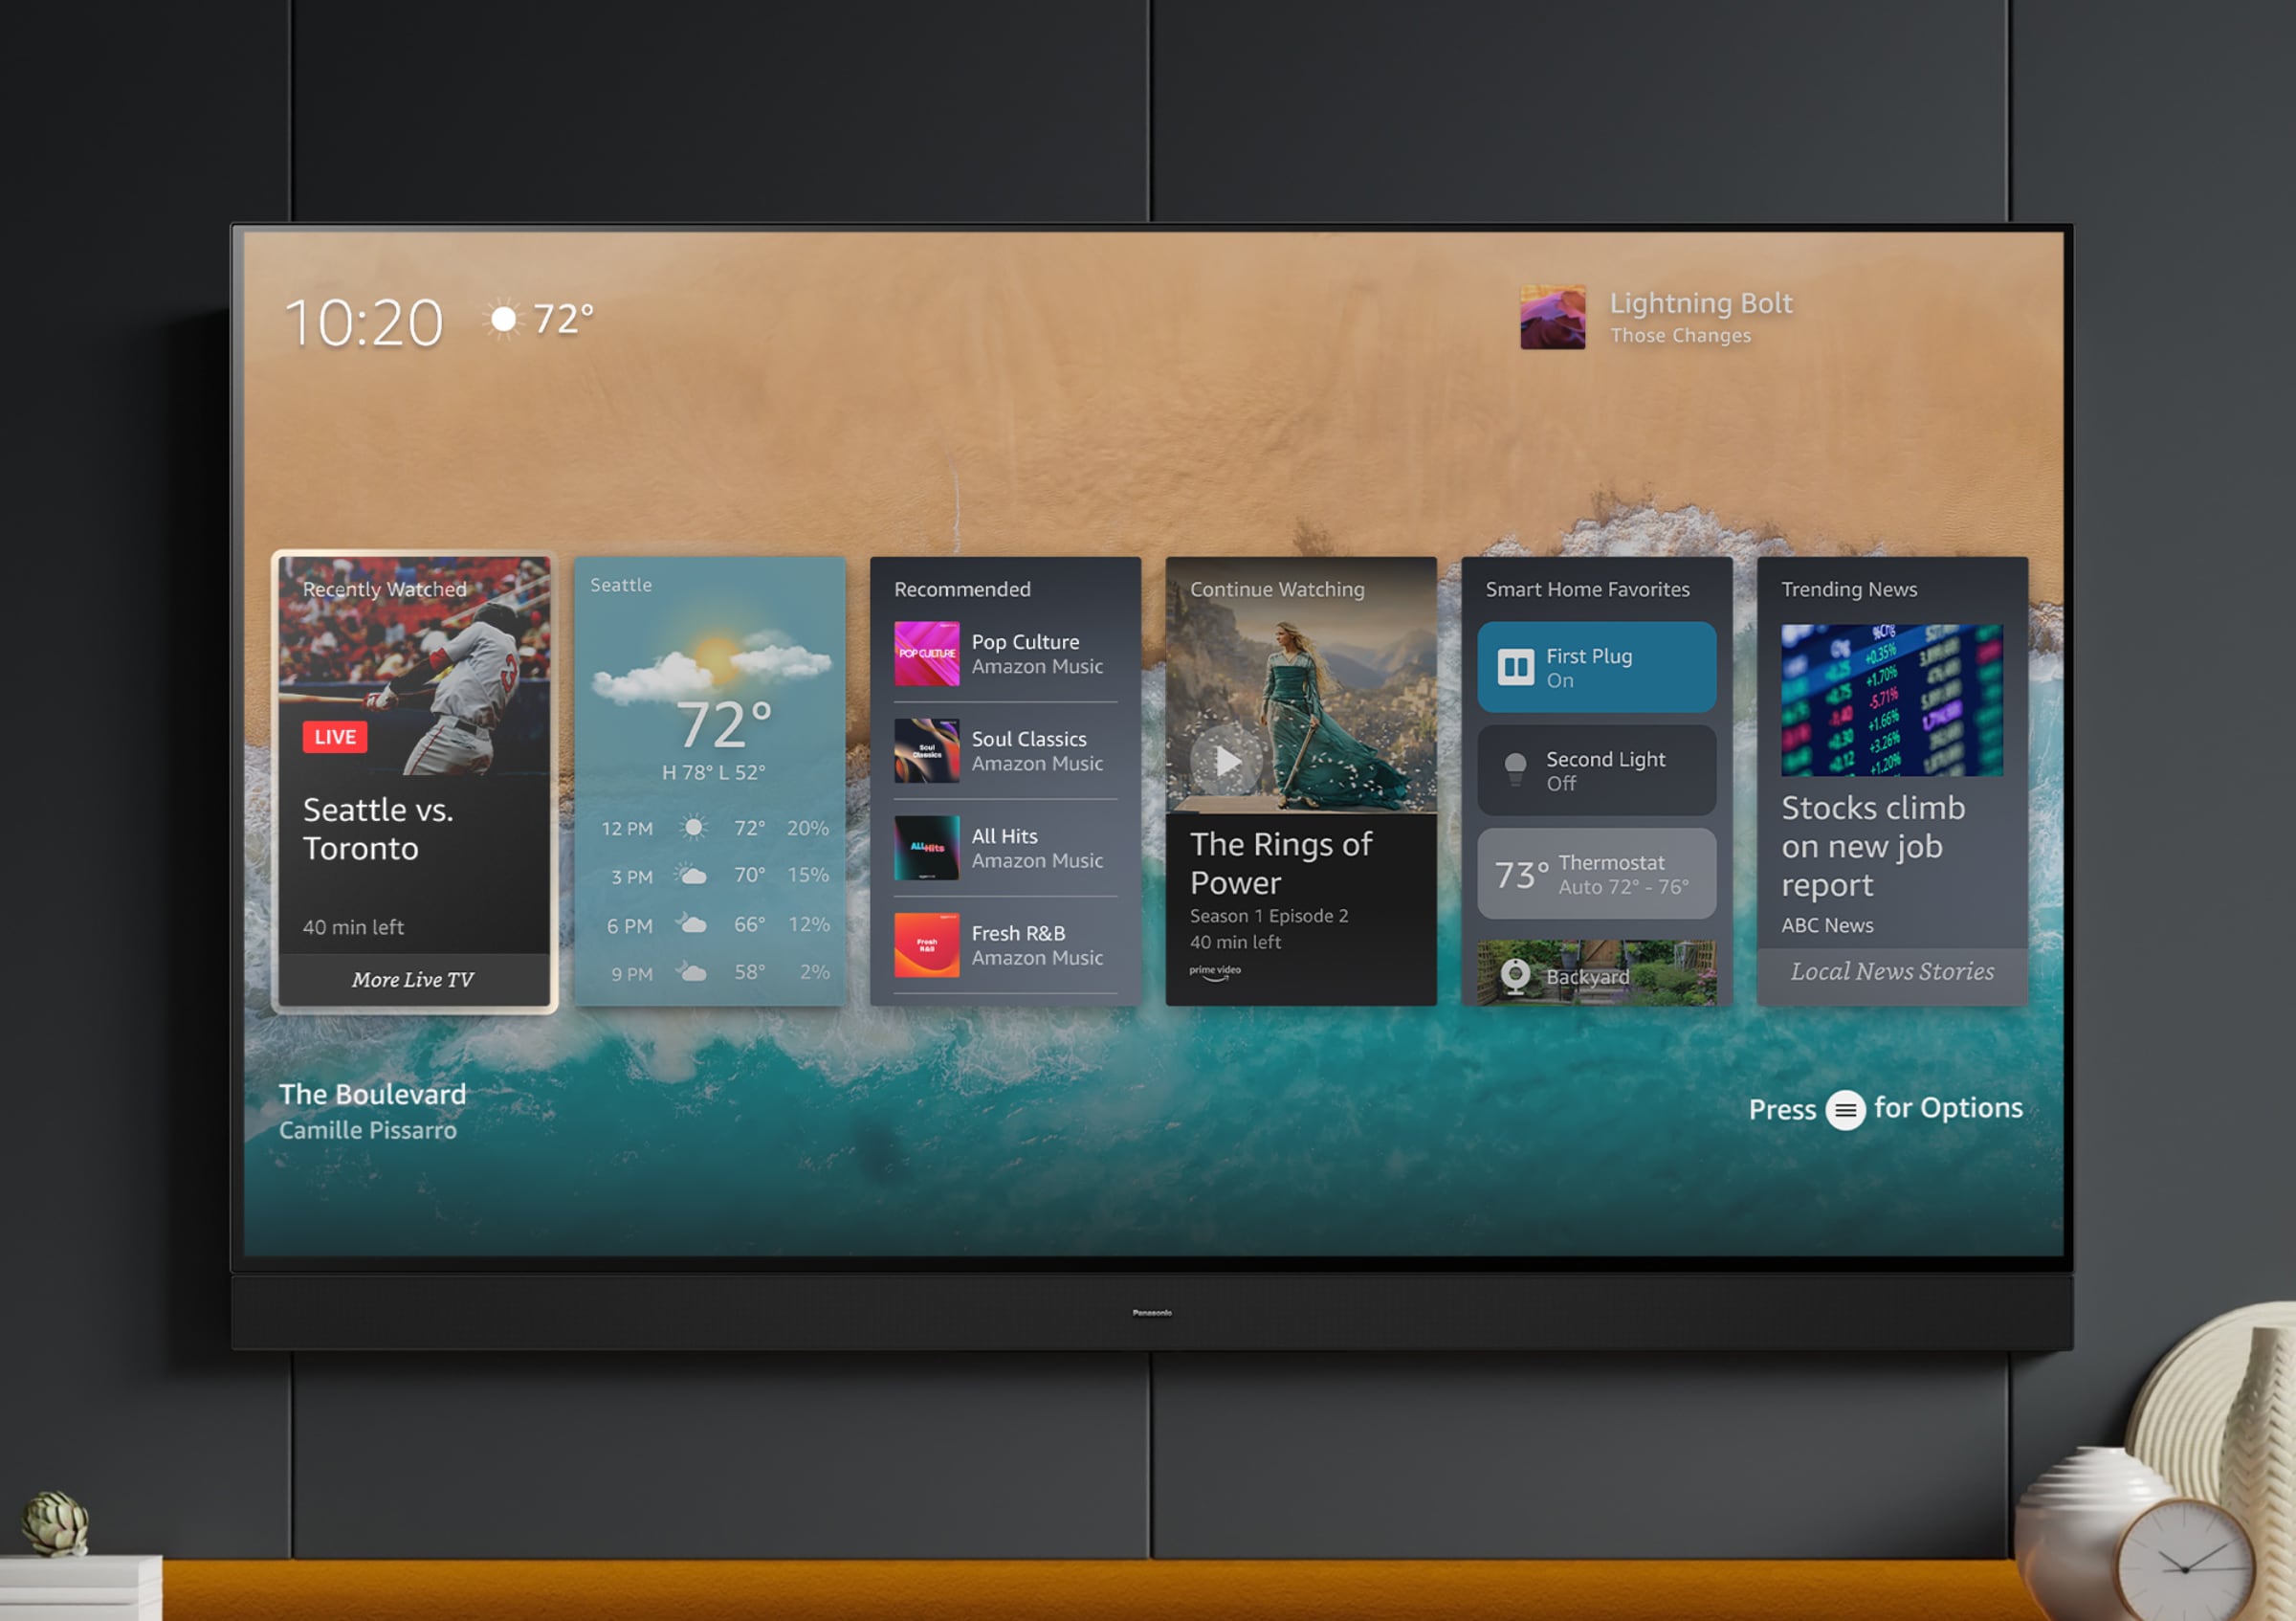 Firefox OS & My Home Screen 2.0 on Panasonic smart TVs hands-on 